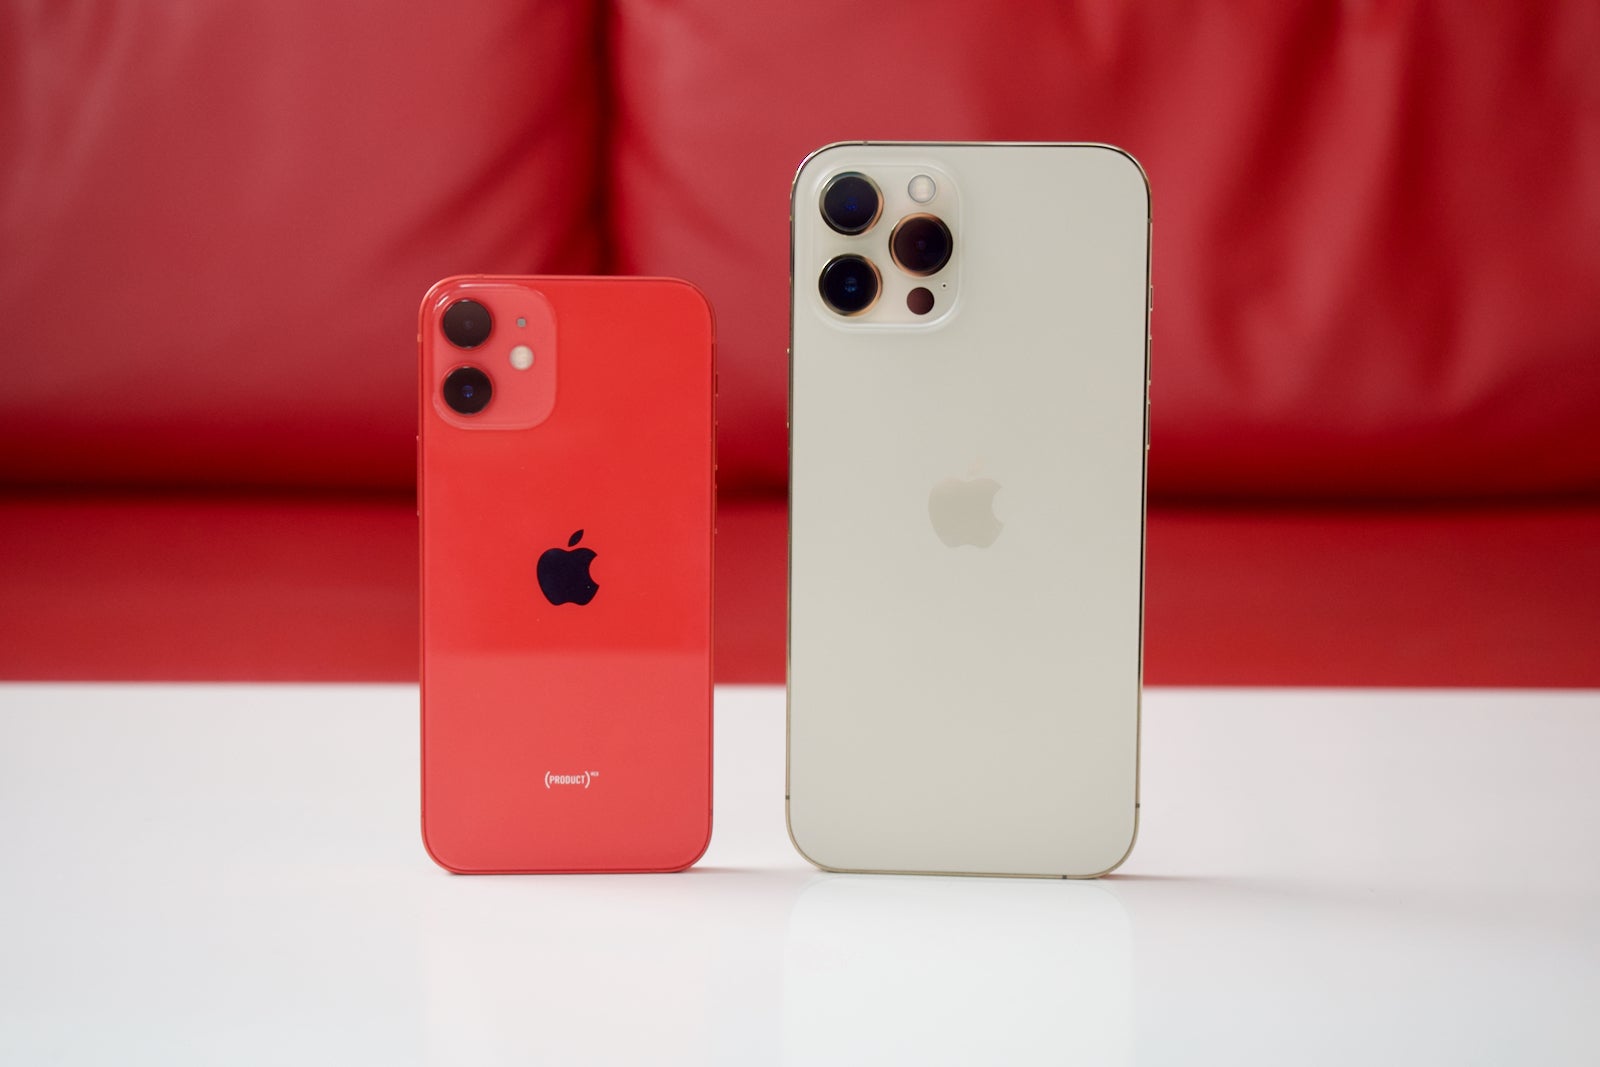 iPhone 12 Mini left, iPhone 12 Pro Max right - Should Apple just kill the iPhone 12 Mini?